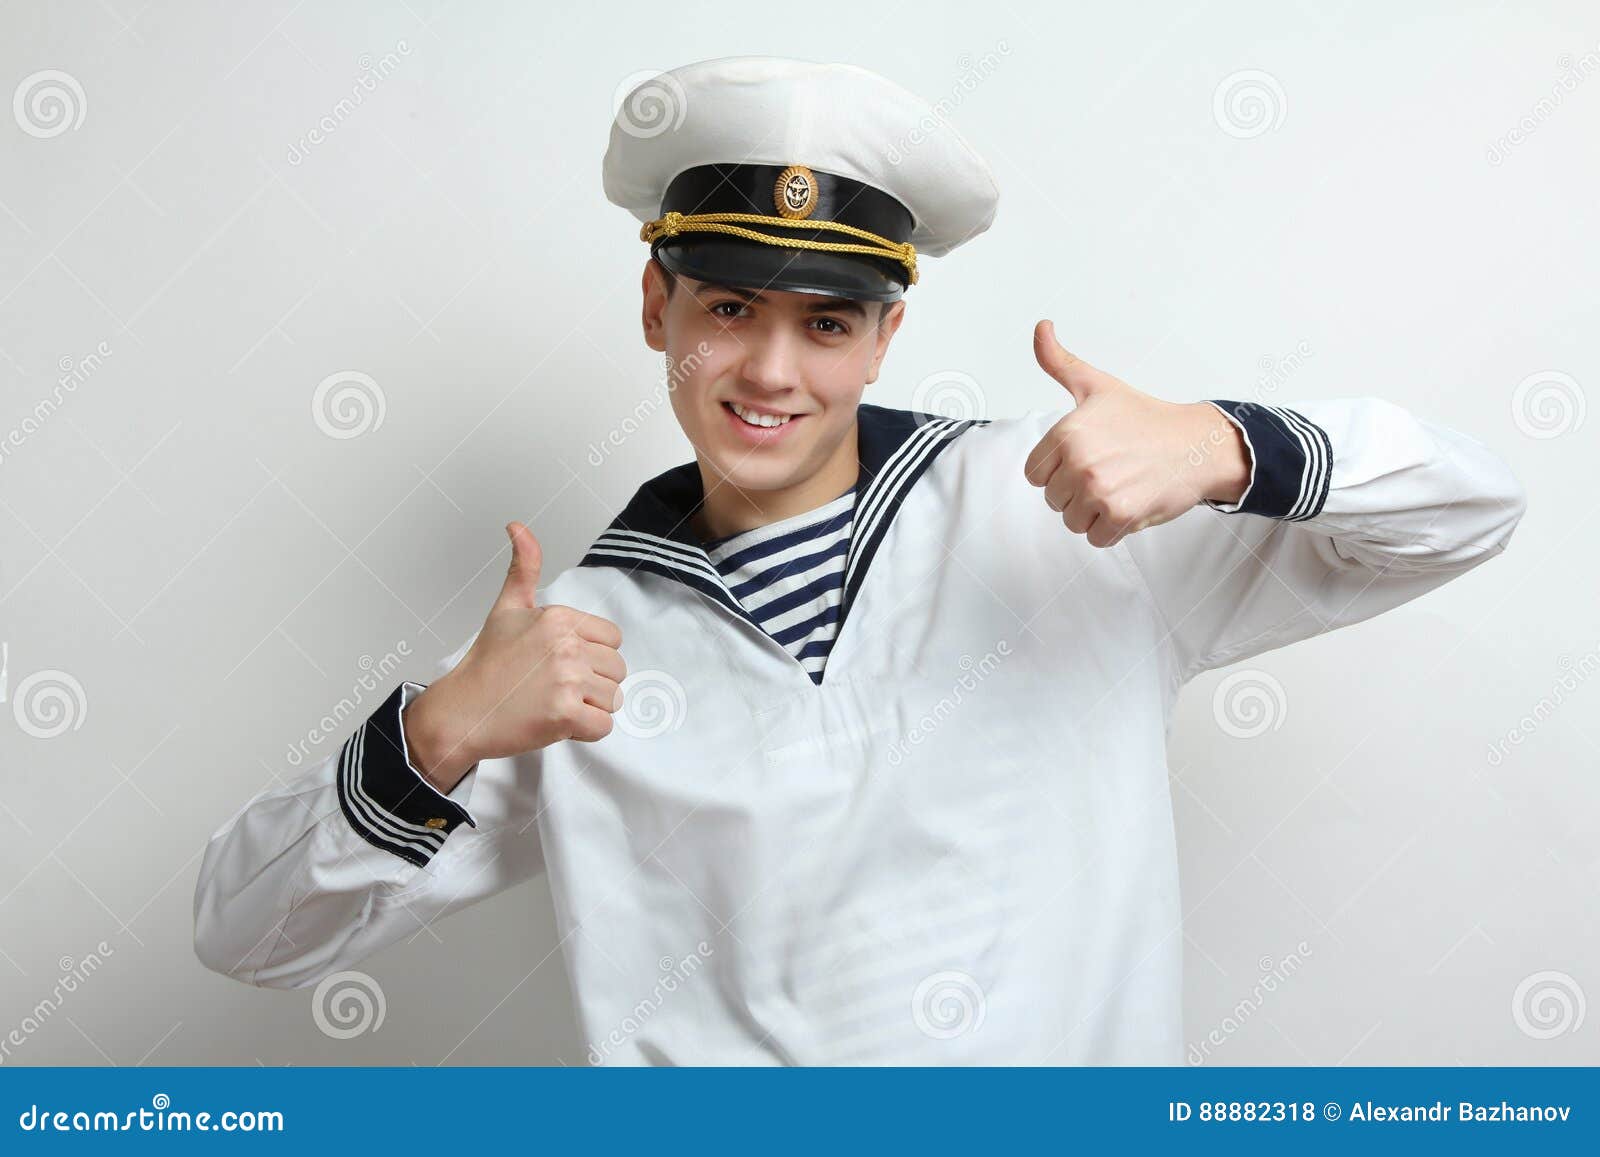 young sailor